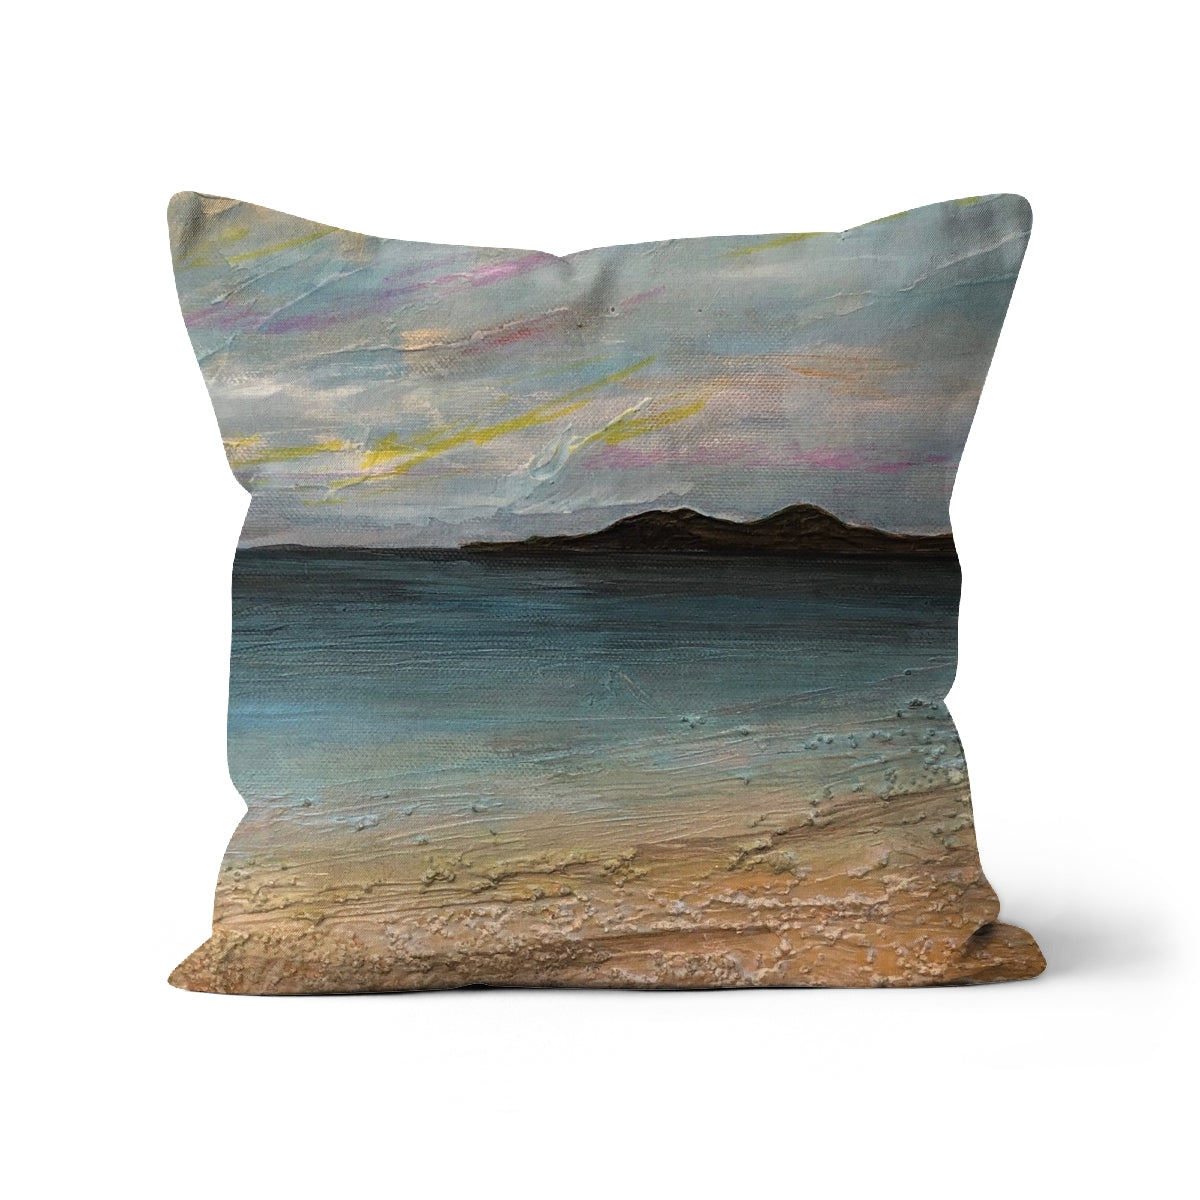 Garrynamonie Beach South Uist Art Gifts Cushion-Cushions-Hebridean Islands Art Gallery-Linen-12"x12"-Paintings, Prints, Homeware, Art Gifts From Scotland By Scottish Artist Kevin Hunter